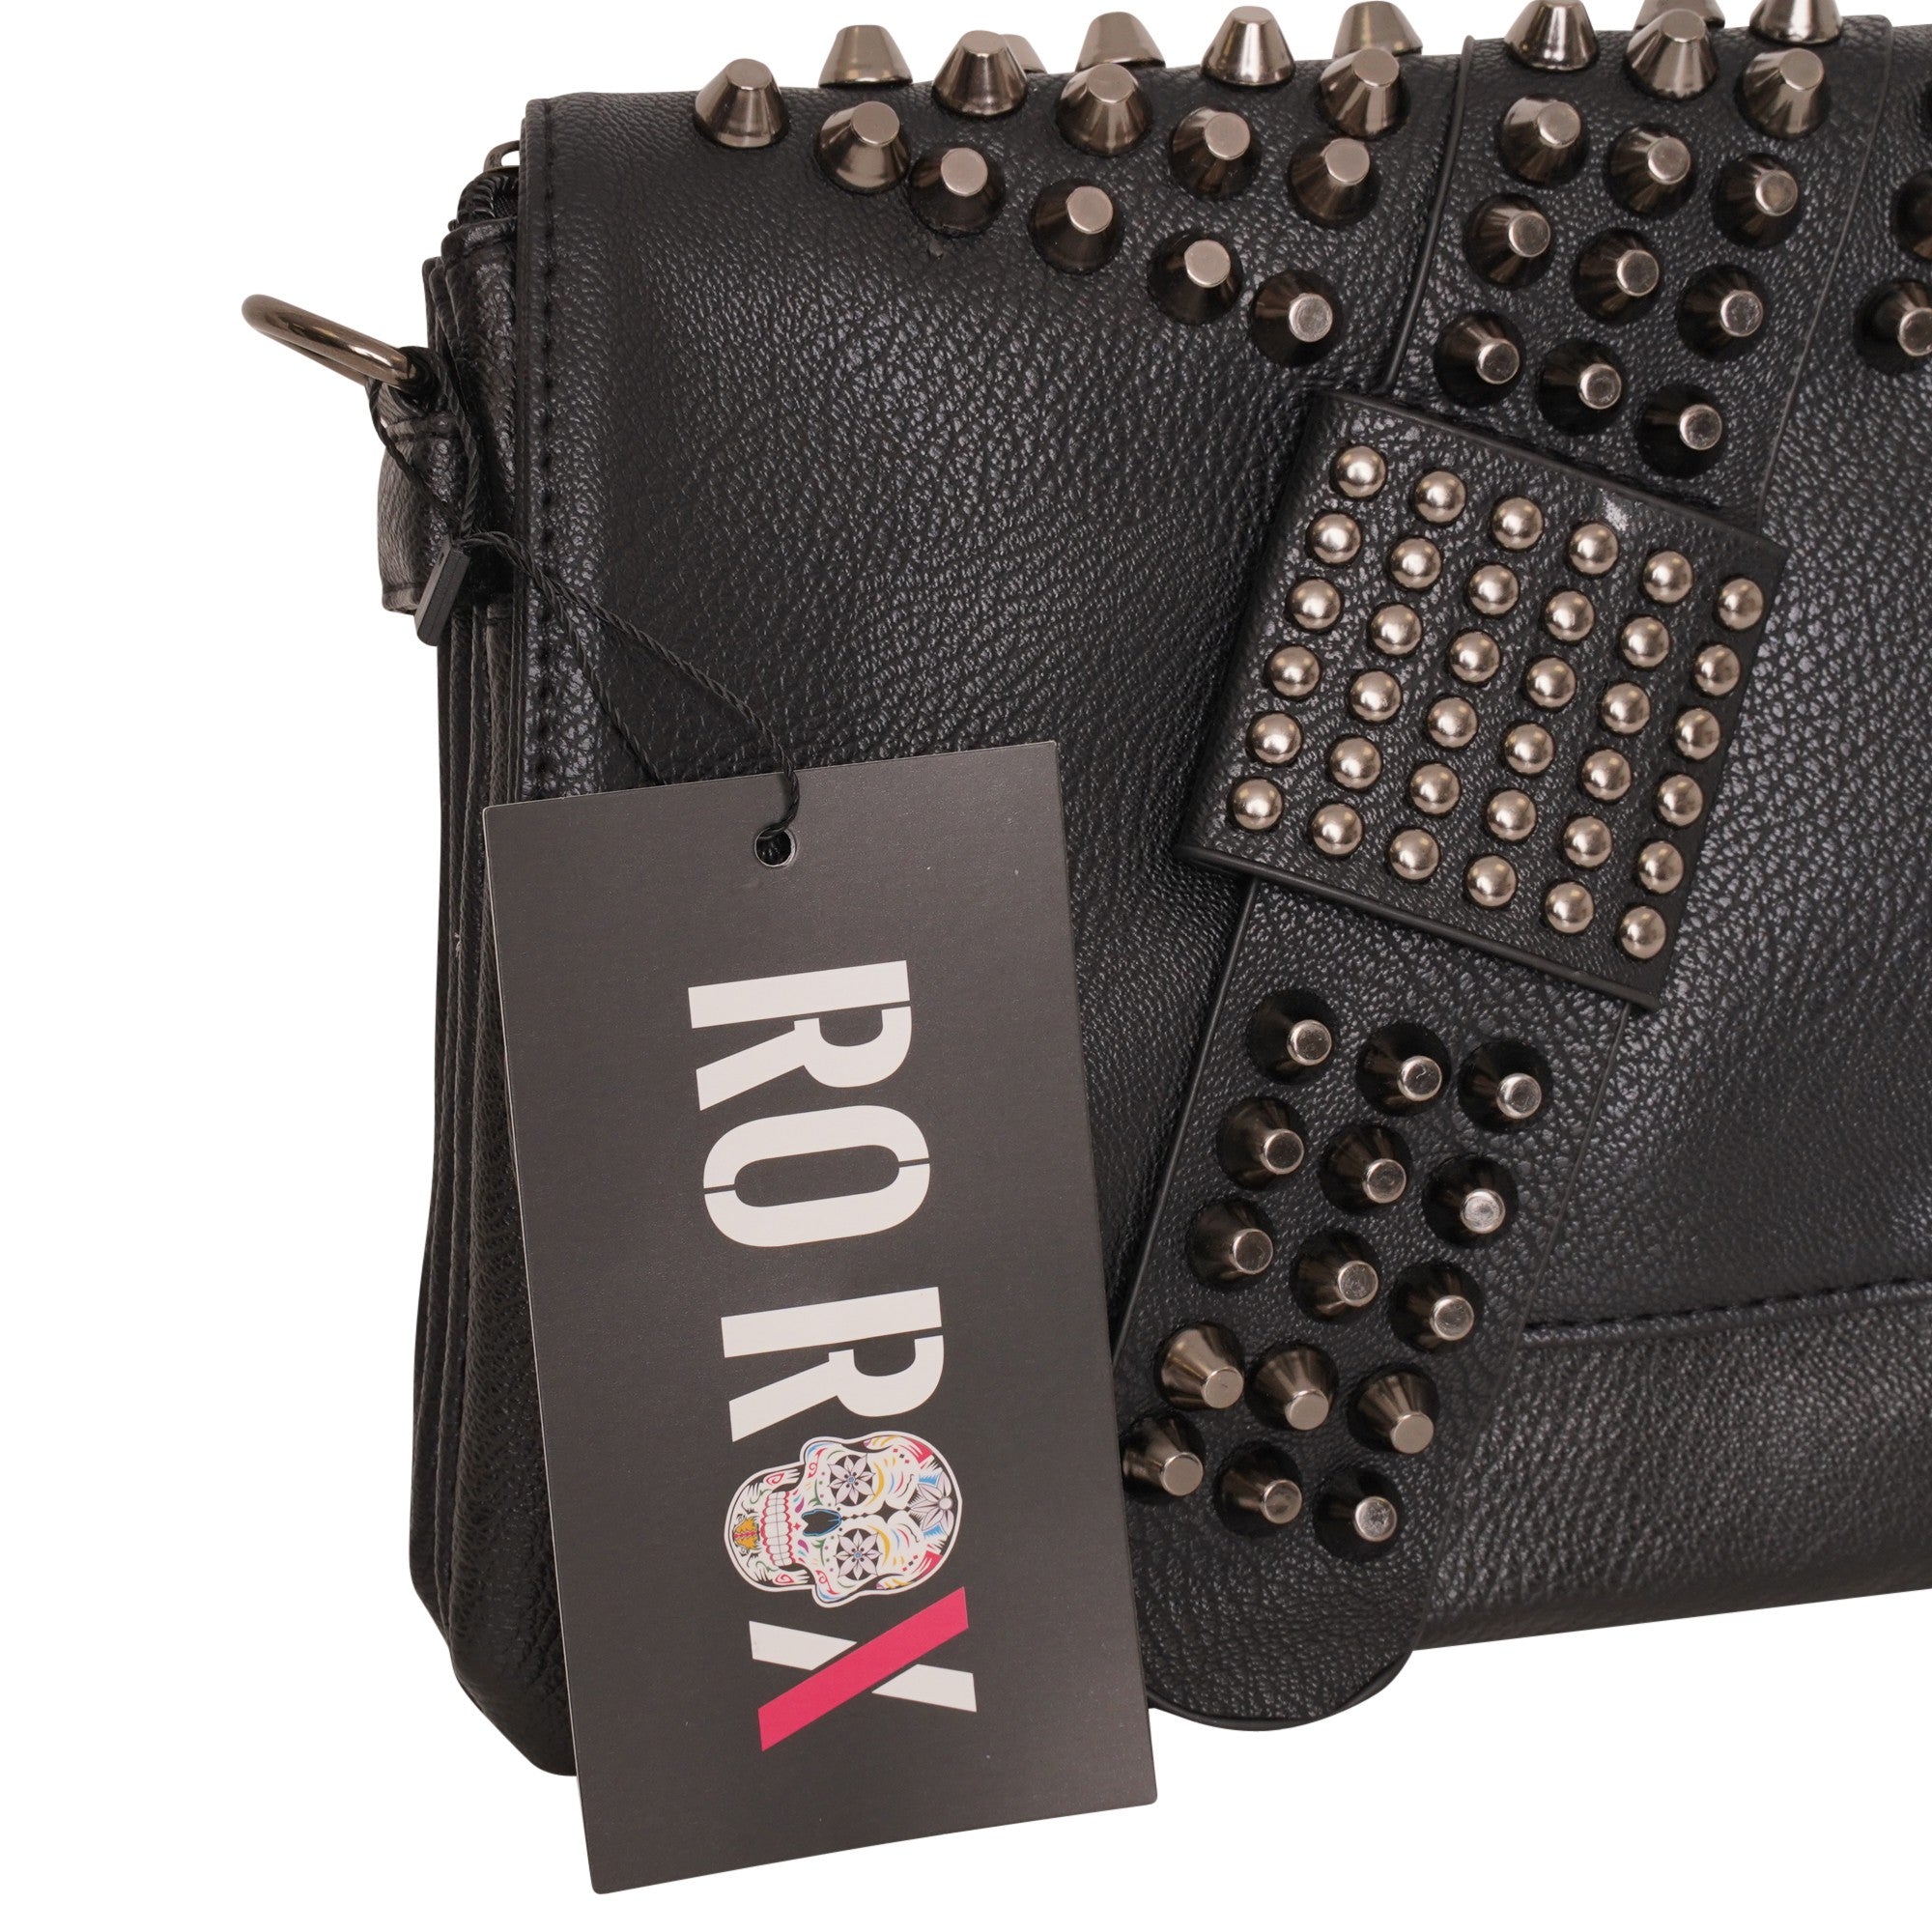 Ro Rox Ophelia Studded Faux Leather Crossbody Bag, Black, Plain